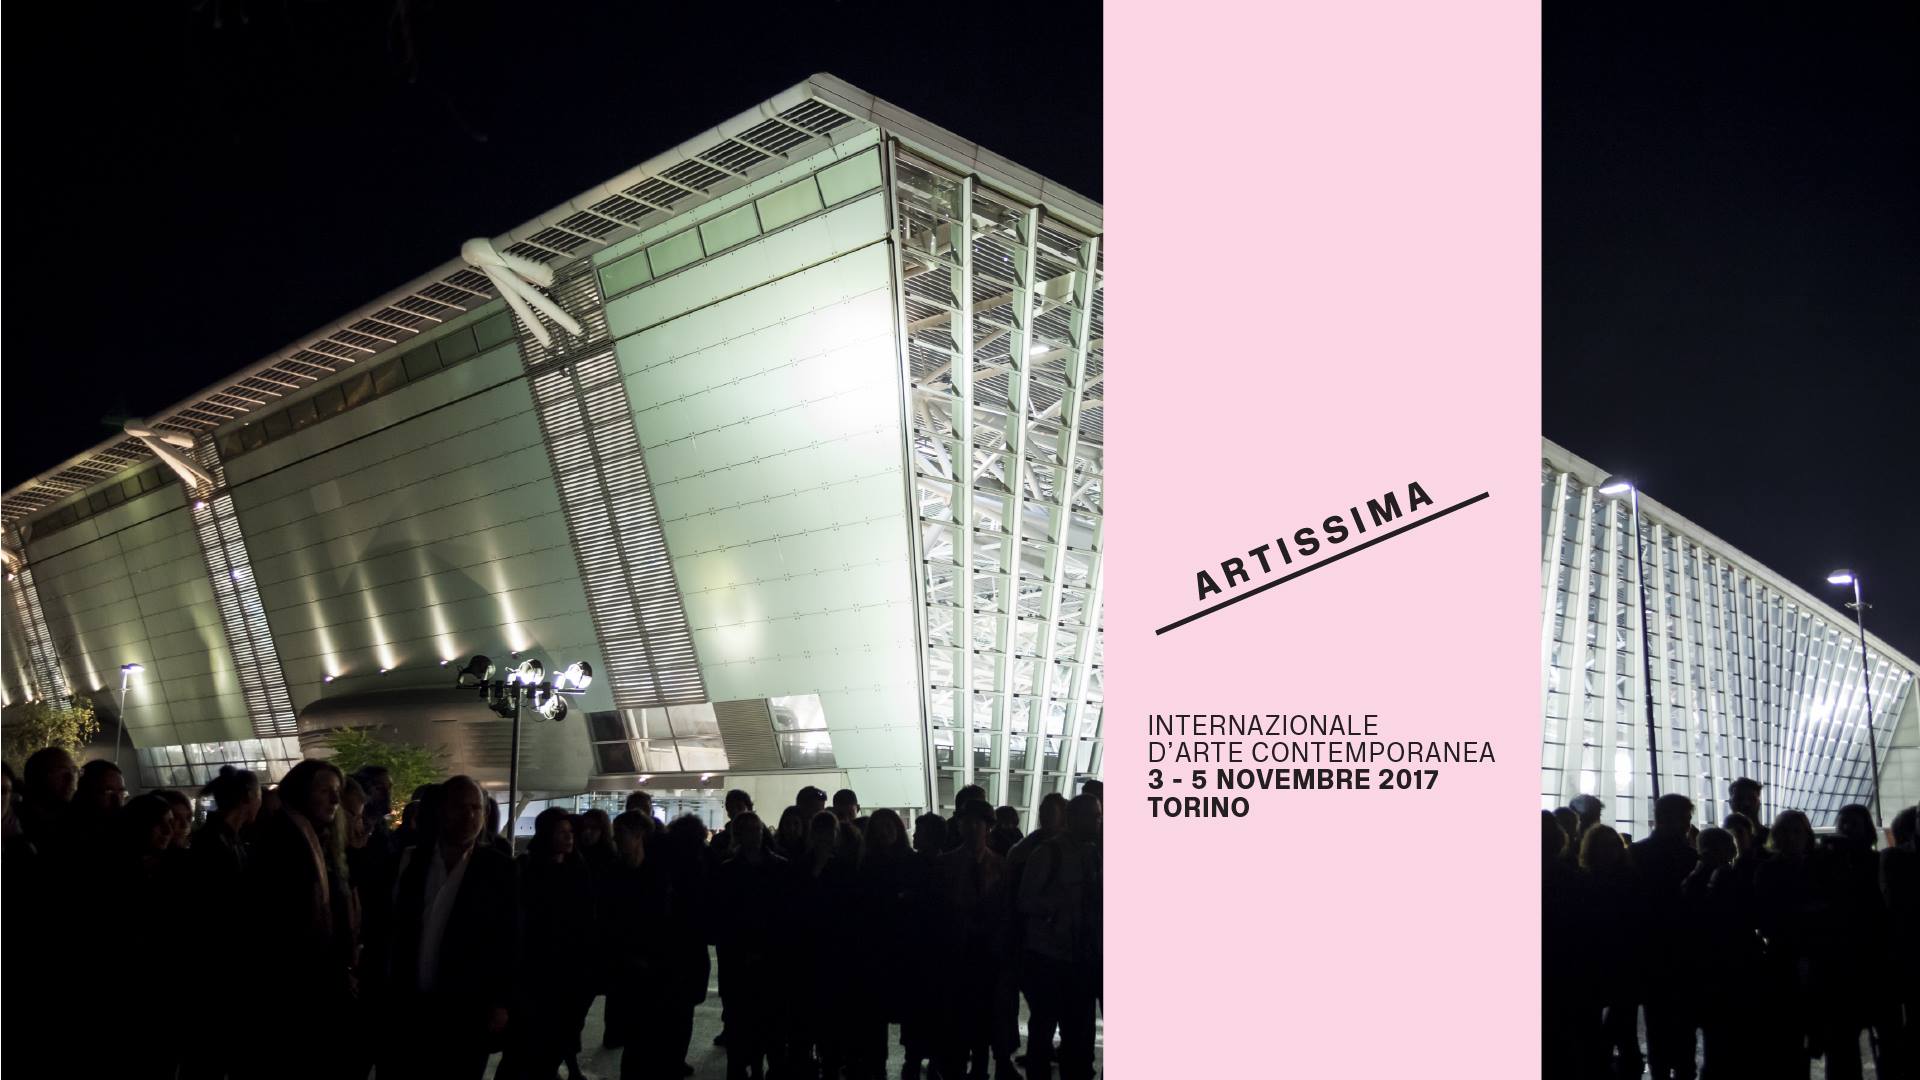 #P420 goes to #Artissima 2017, Turin - 